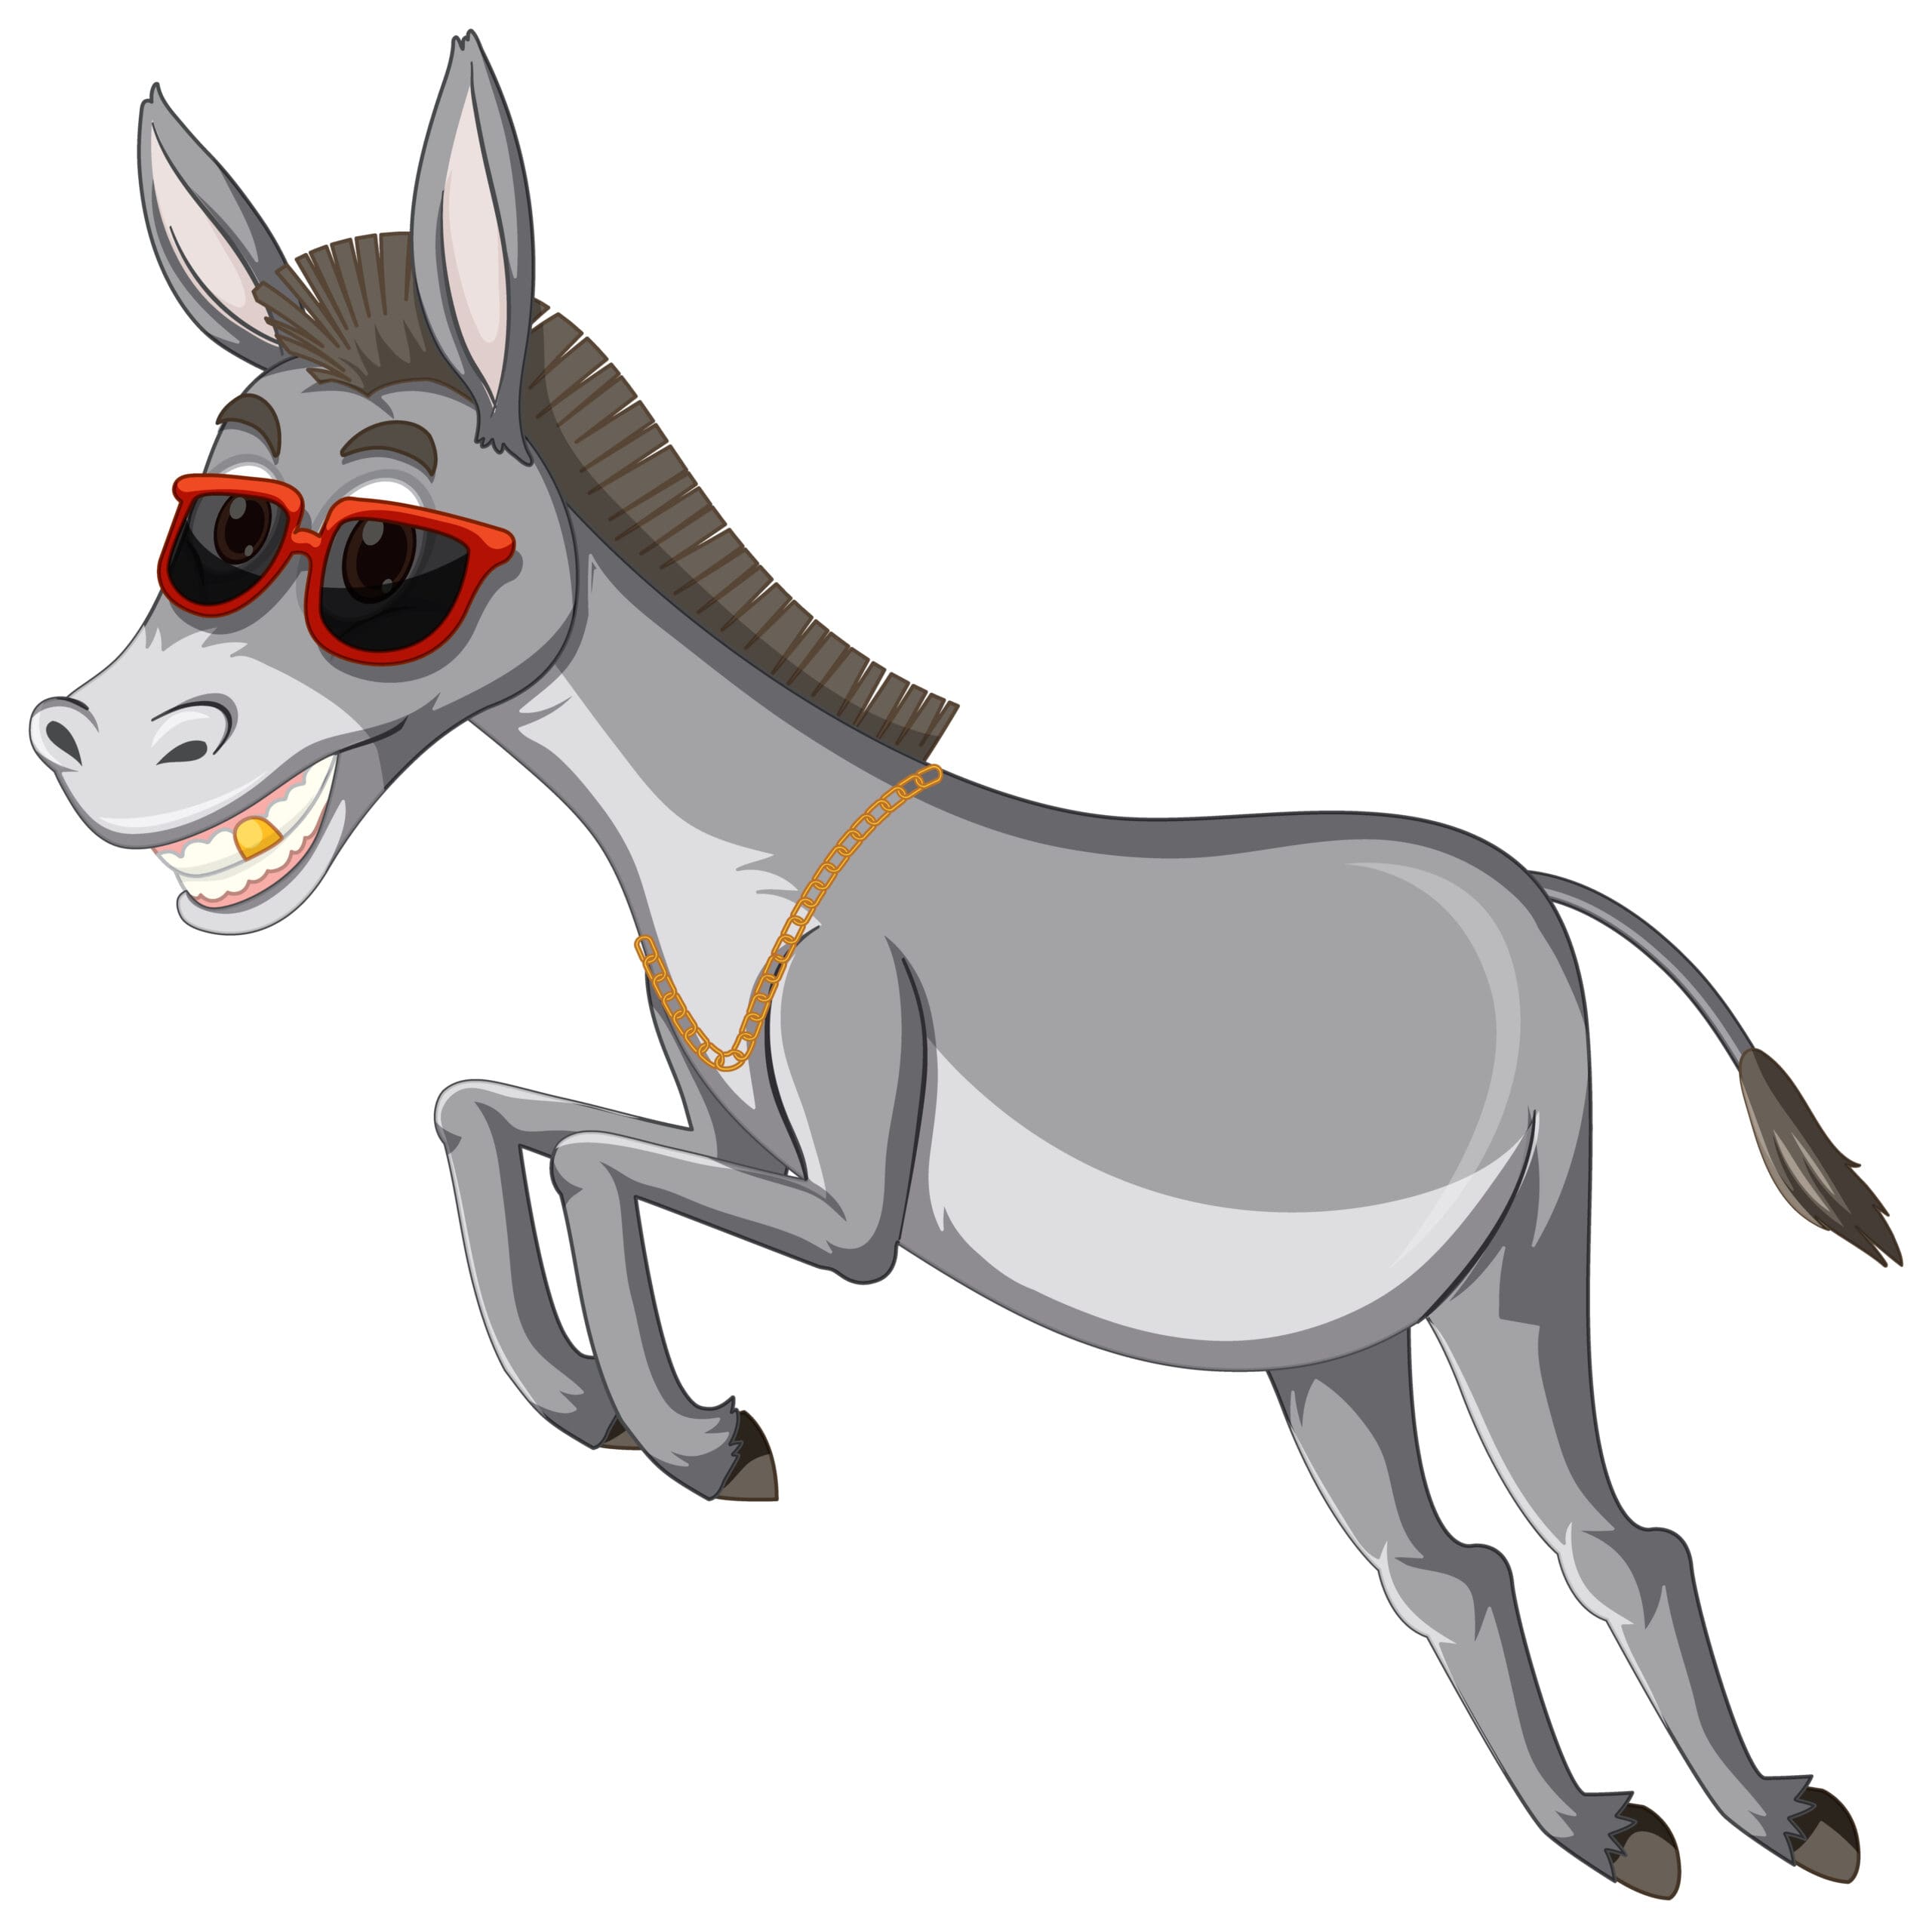 Cartoon graphic of a donkey wearing sunglasses.